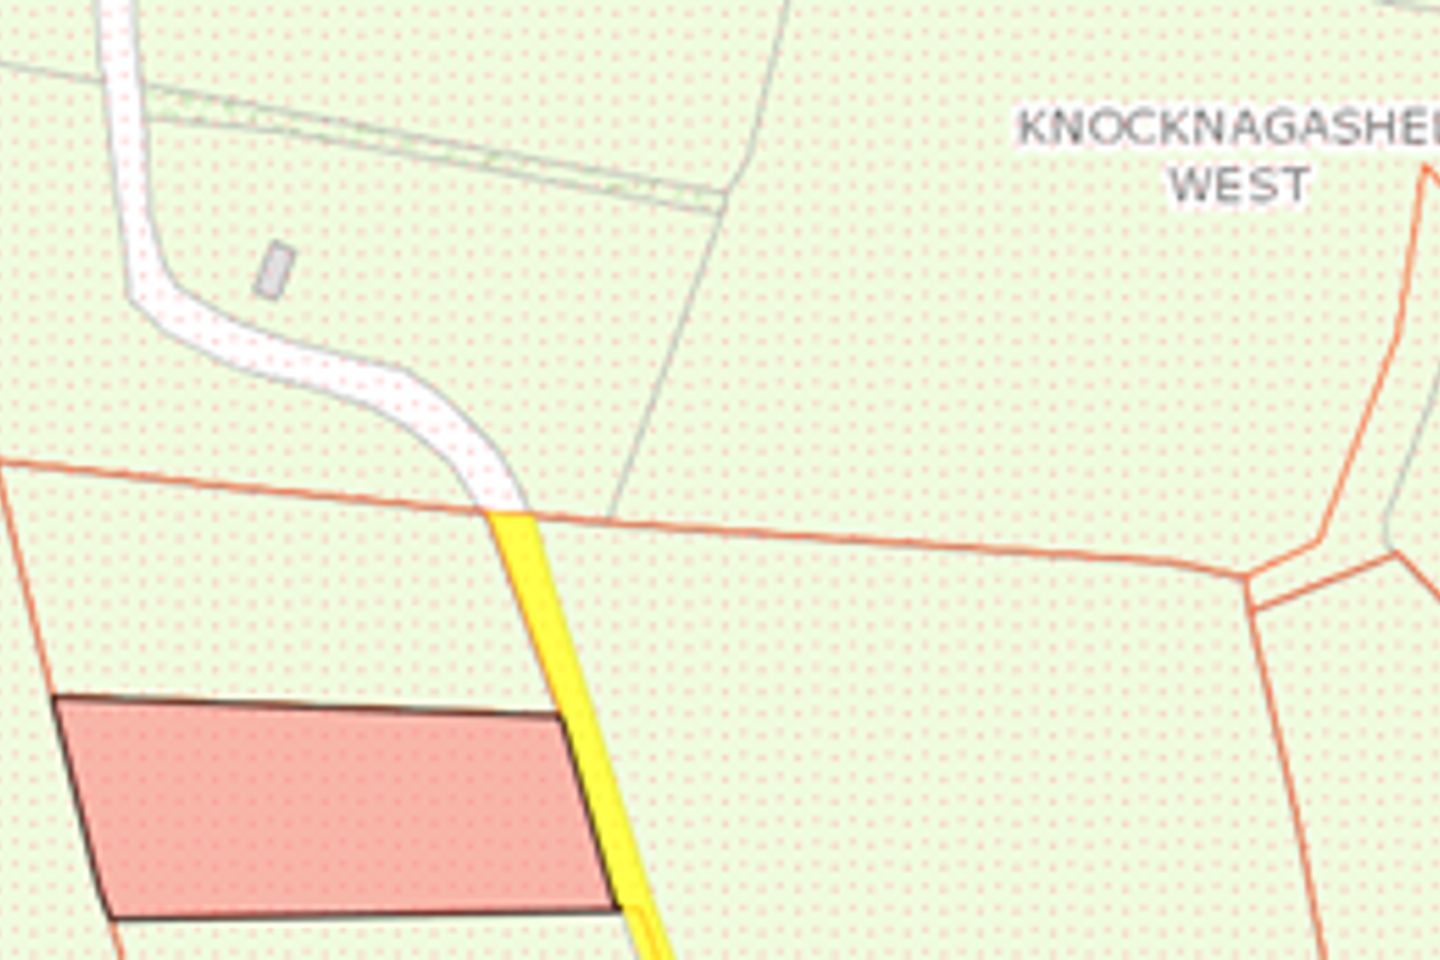 Plot at Boula, Knocknagoshel West, Knocknagoshel, Co. Kerry